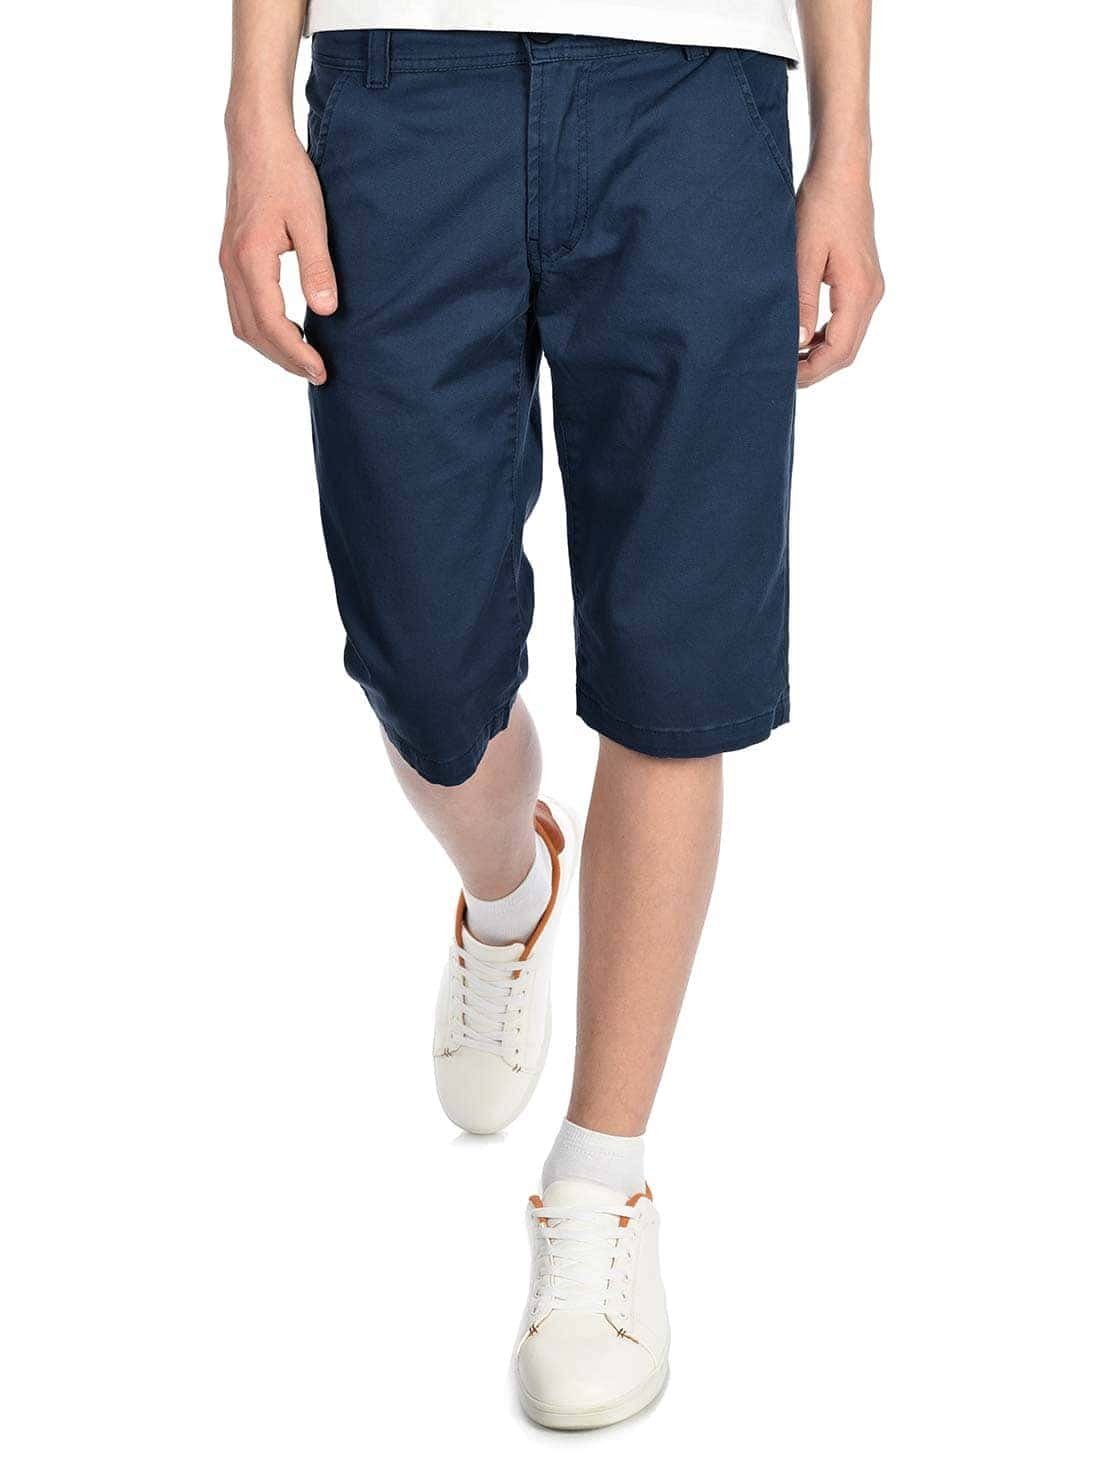 BEZLIT Chinoshorts Kinder Jungen Chino Shorts (1-tlg) mit elastischem Bund Navy | Chinoshorts